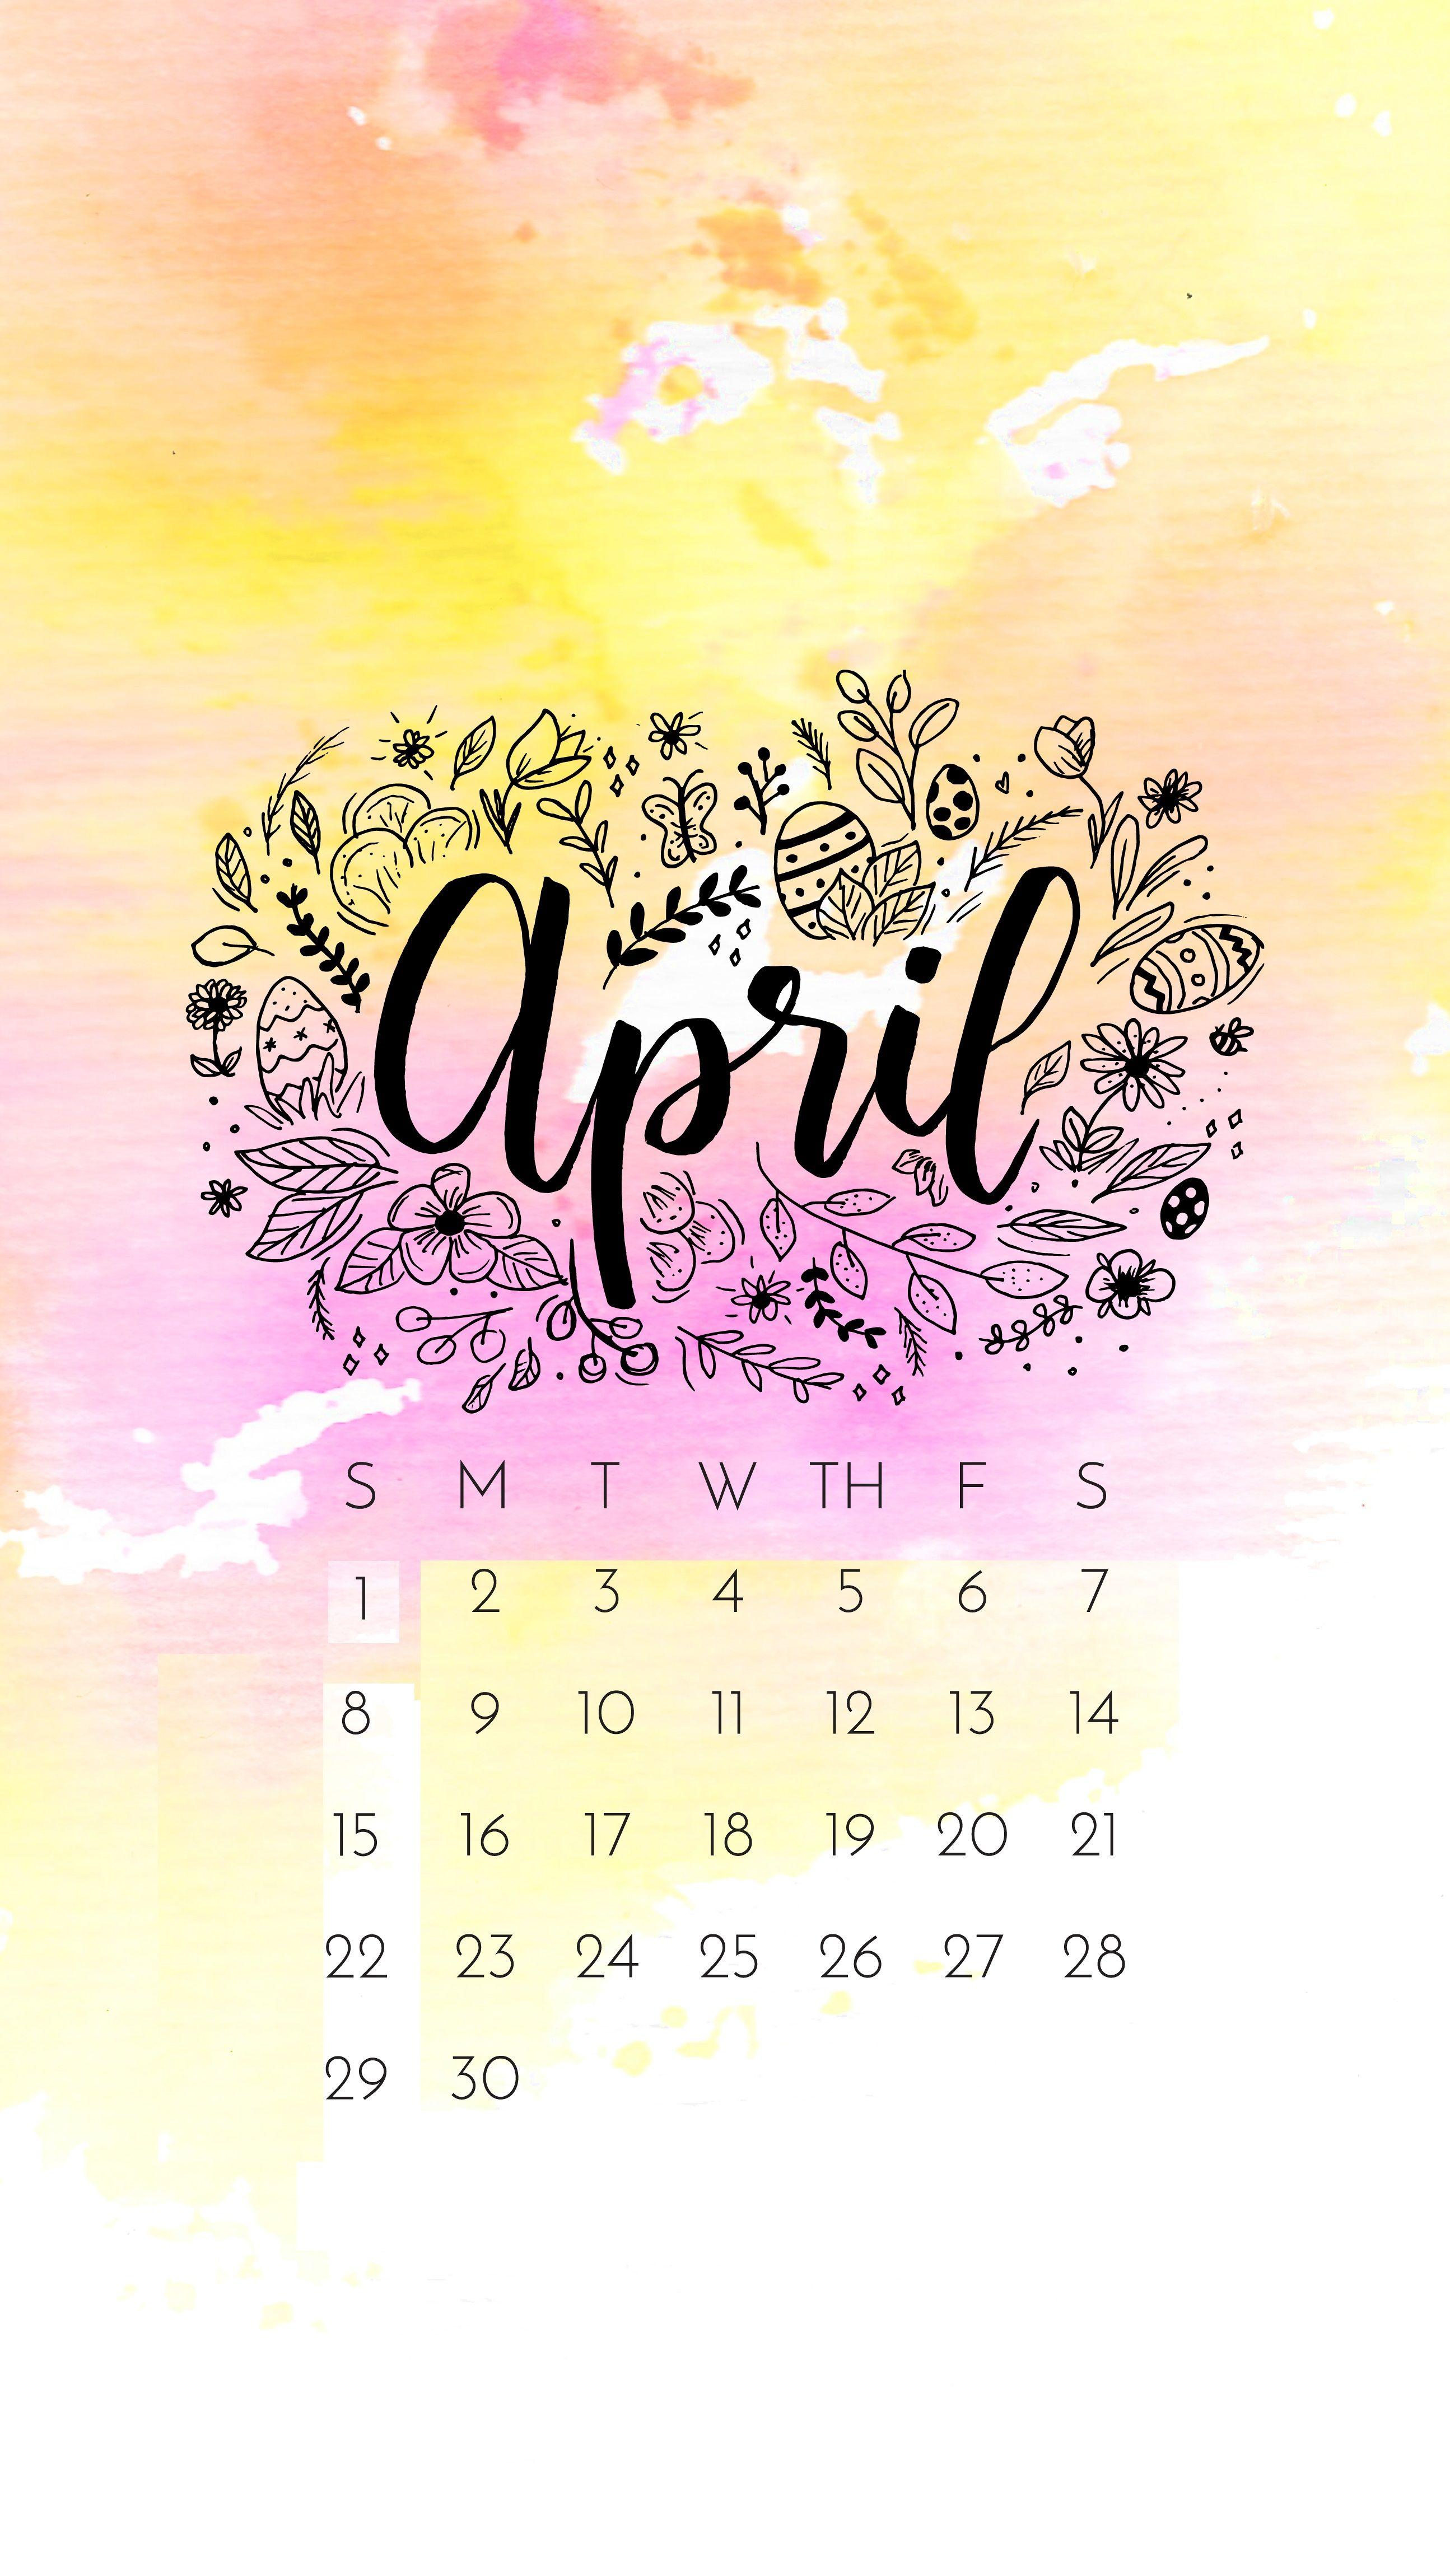 April 2018 iPhone Calendar Wallpaper